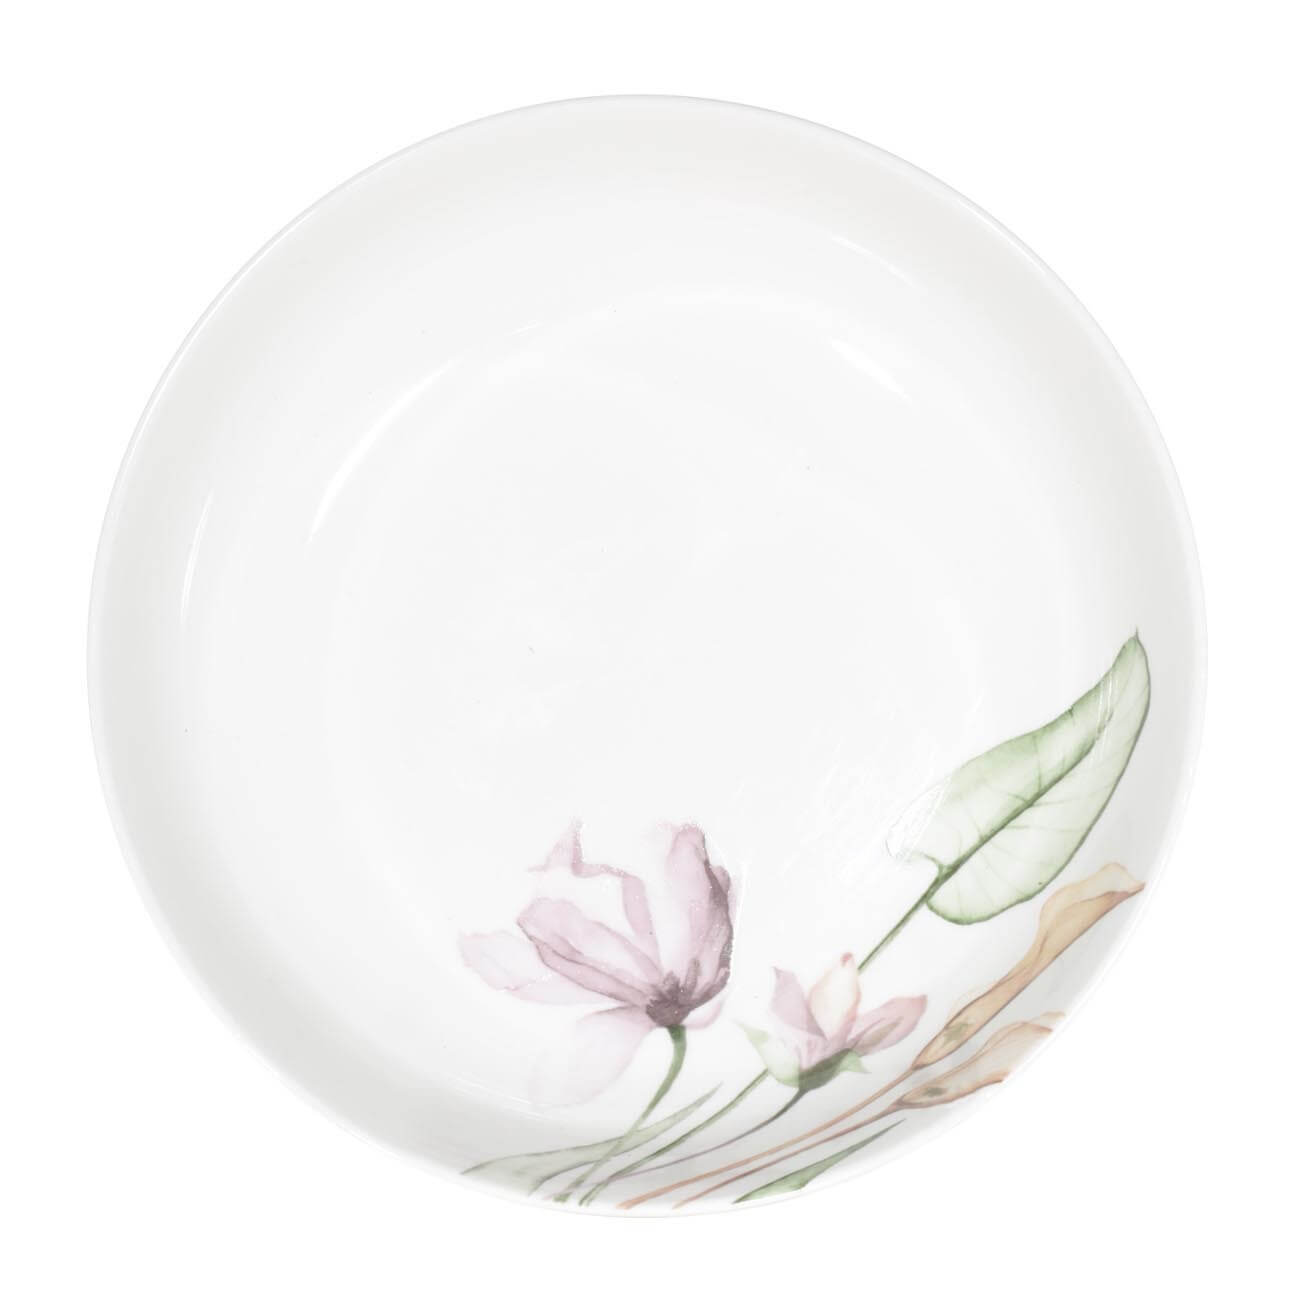 Тарелка обеденная, 27 см, фарфор N, белая, Великолепный цветок, Gorgeous flower - фото 1